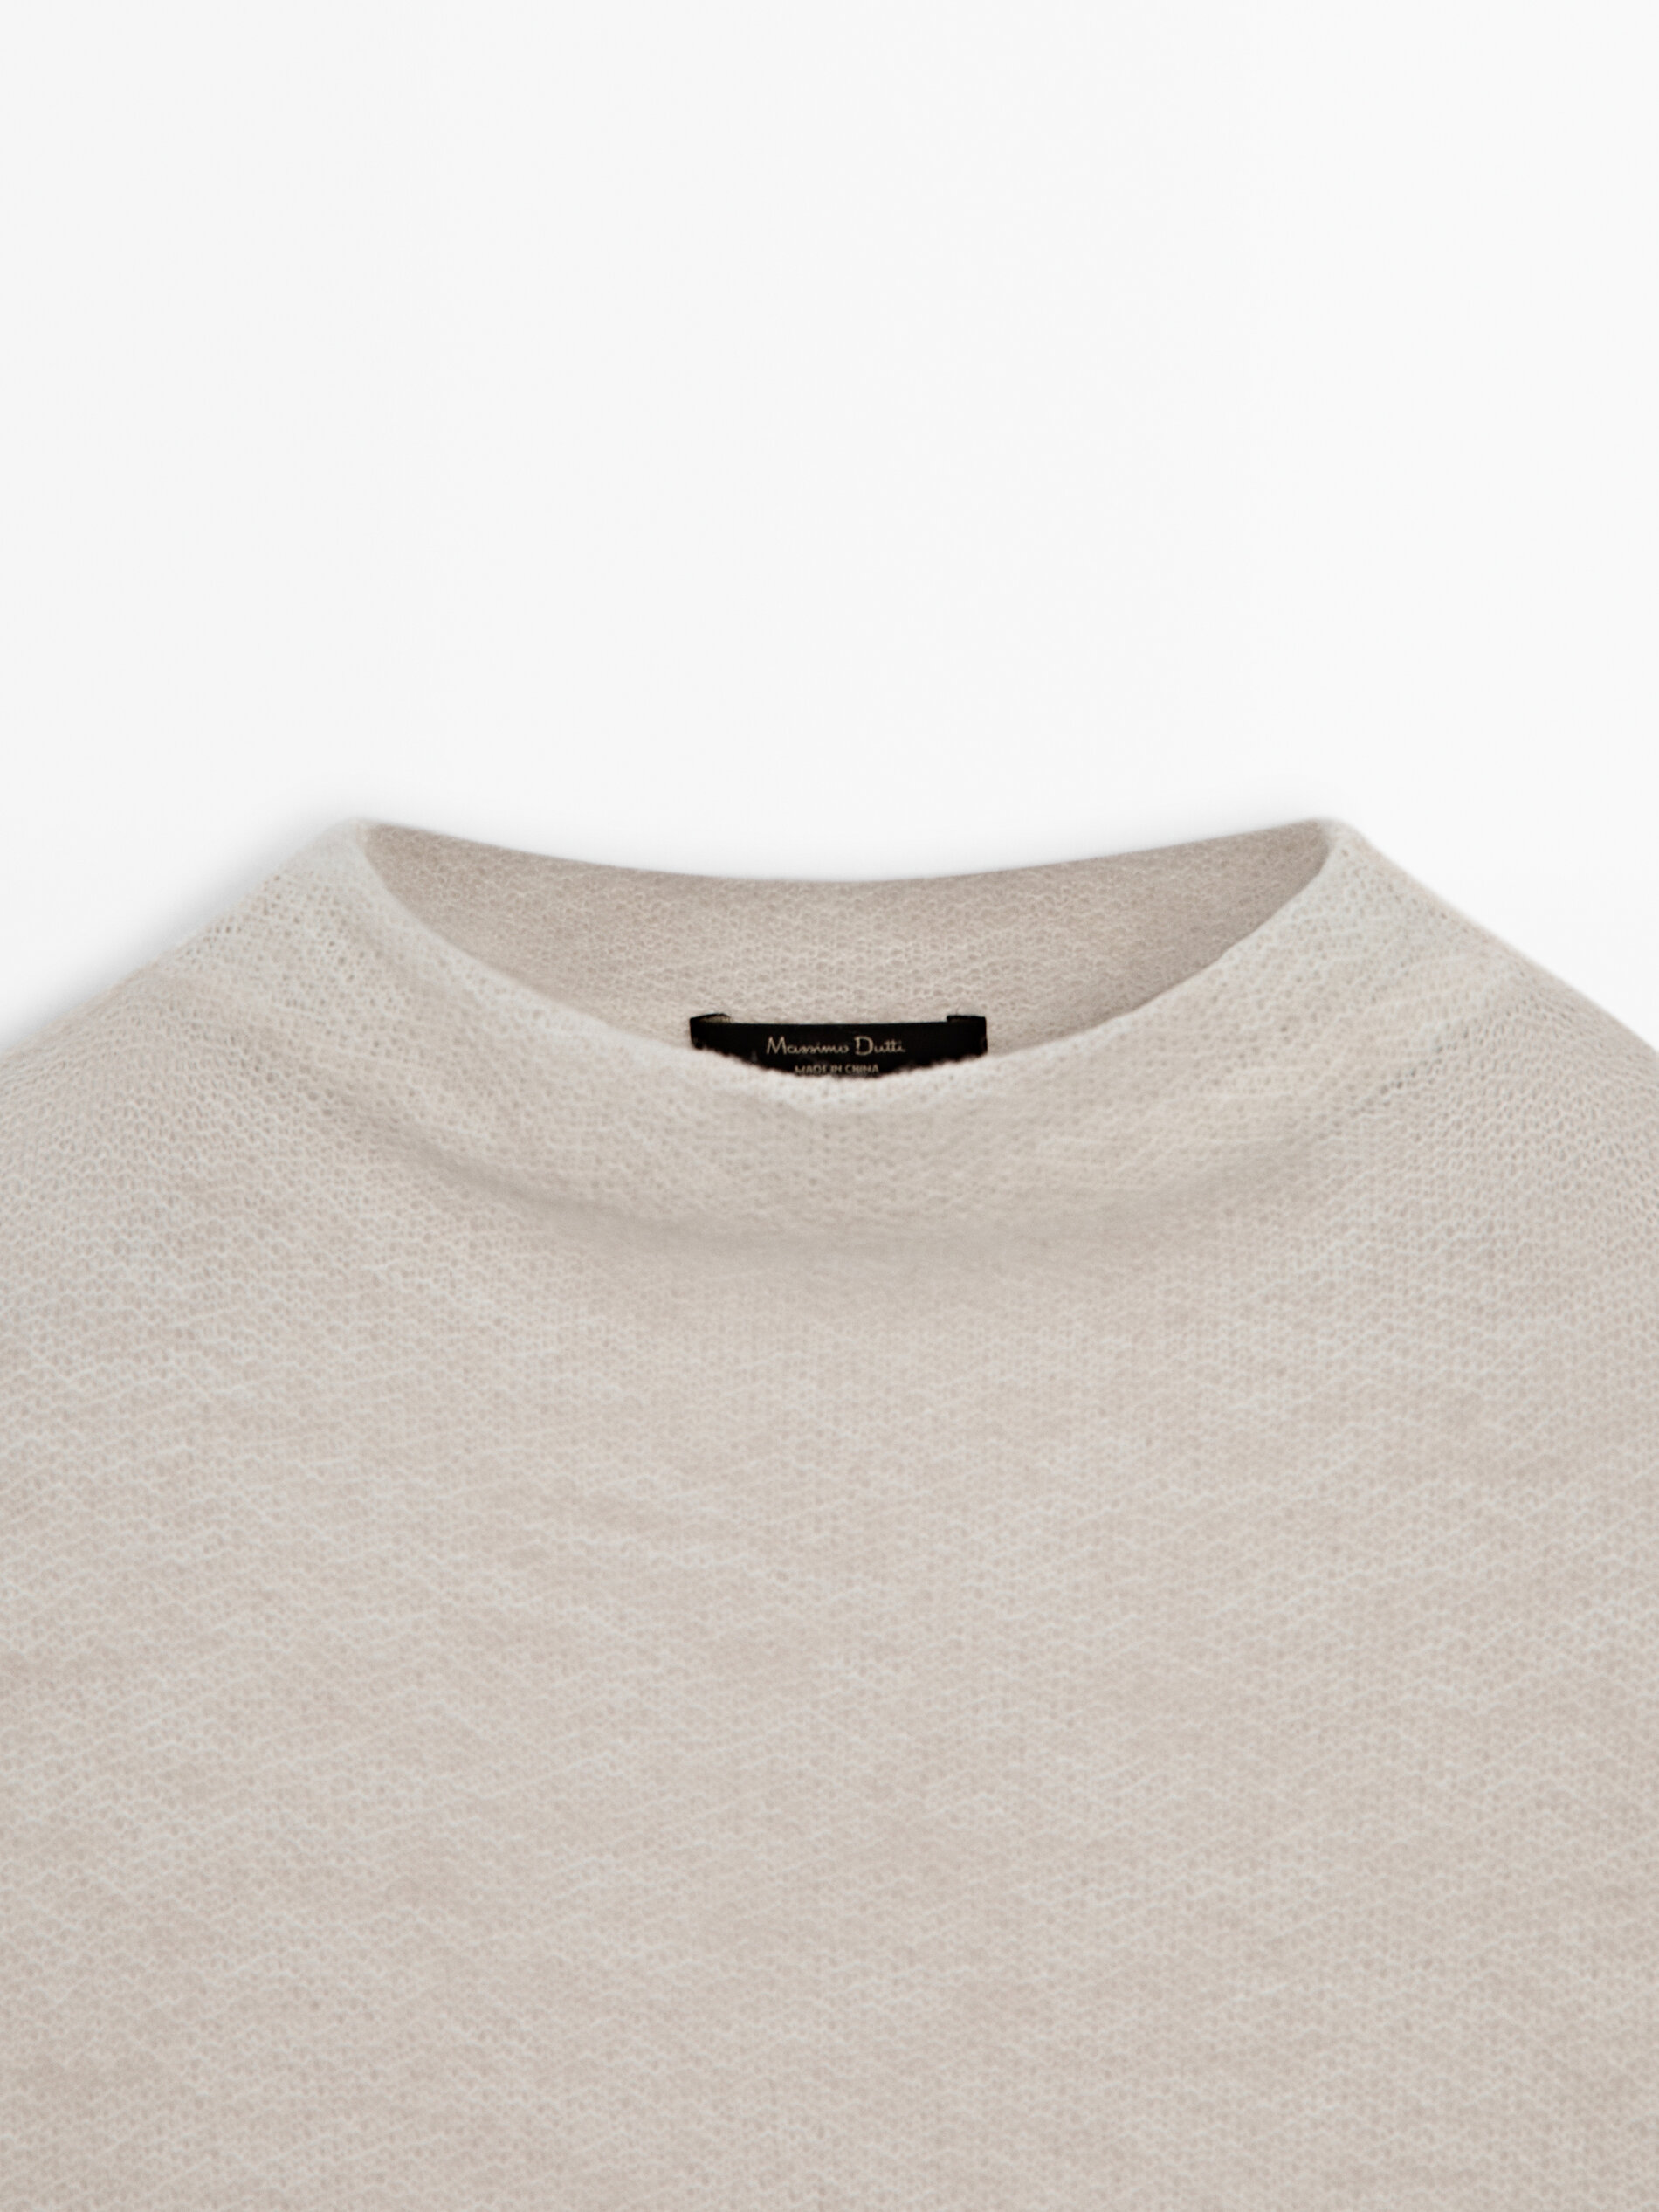 Camiseta manga larga con lana cuello subido